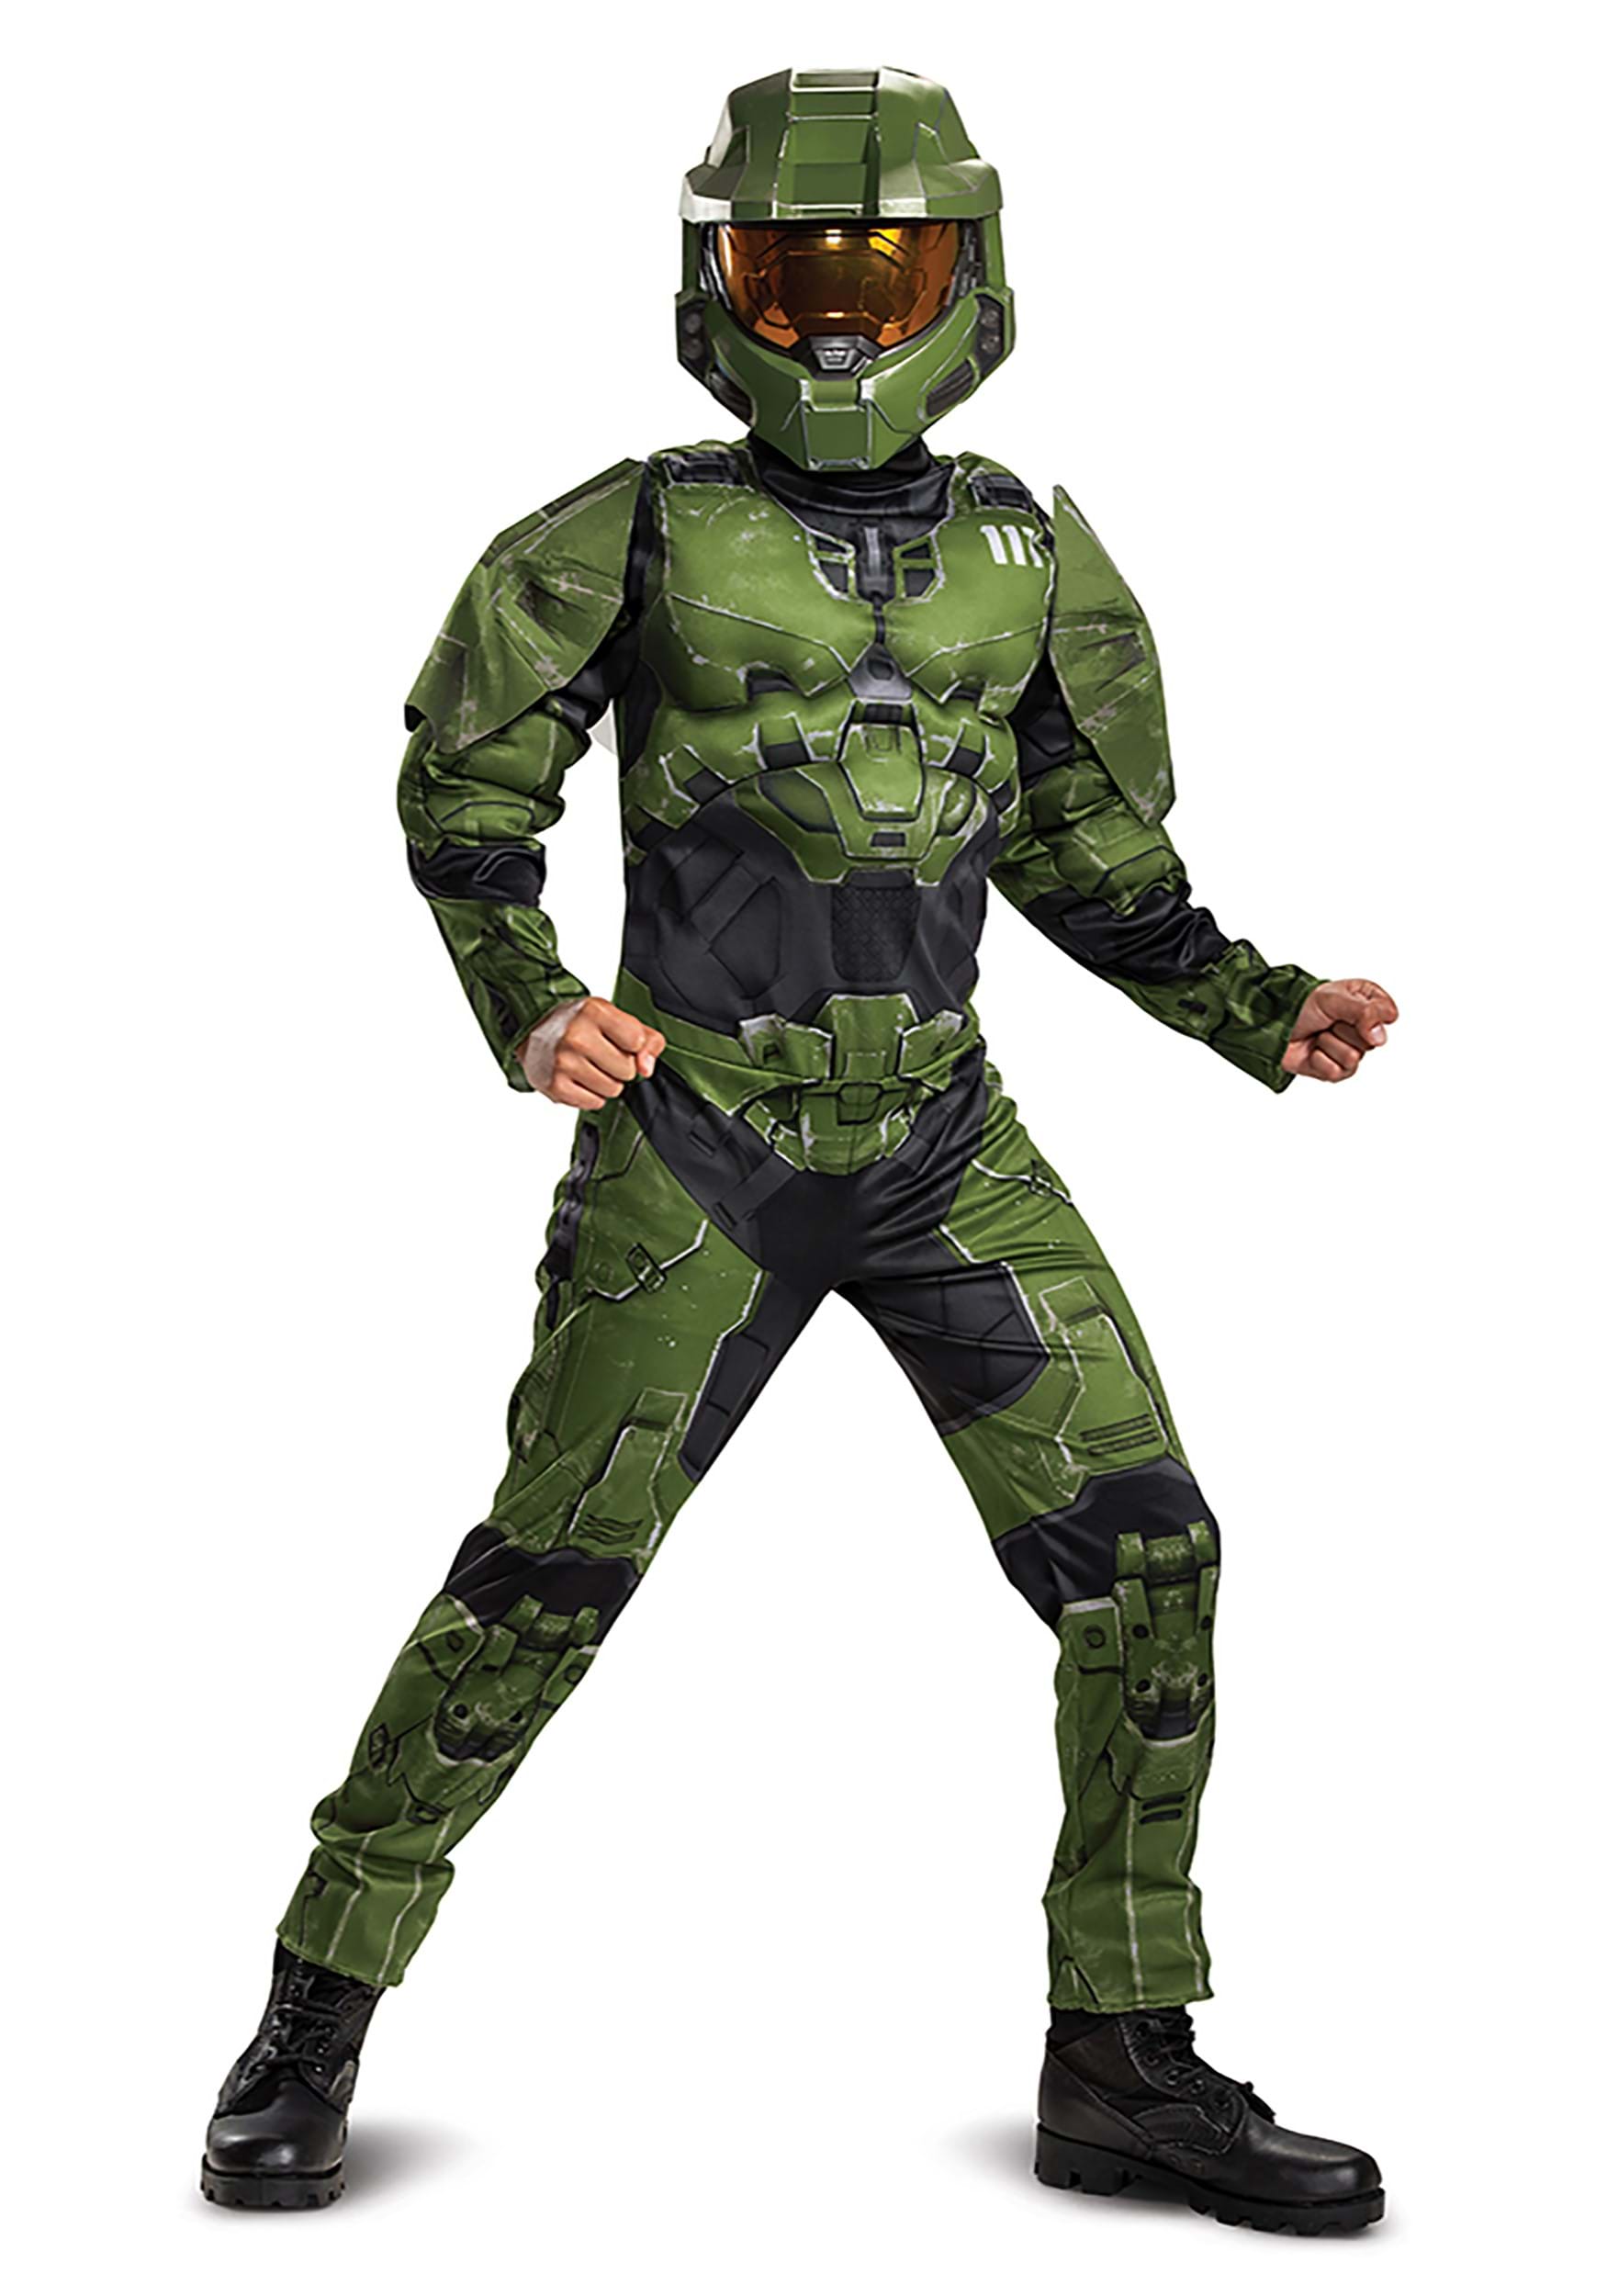 Kid's Halo Infinite Master Chief Muscle Costume